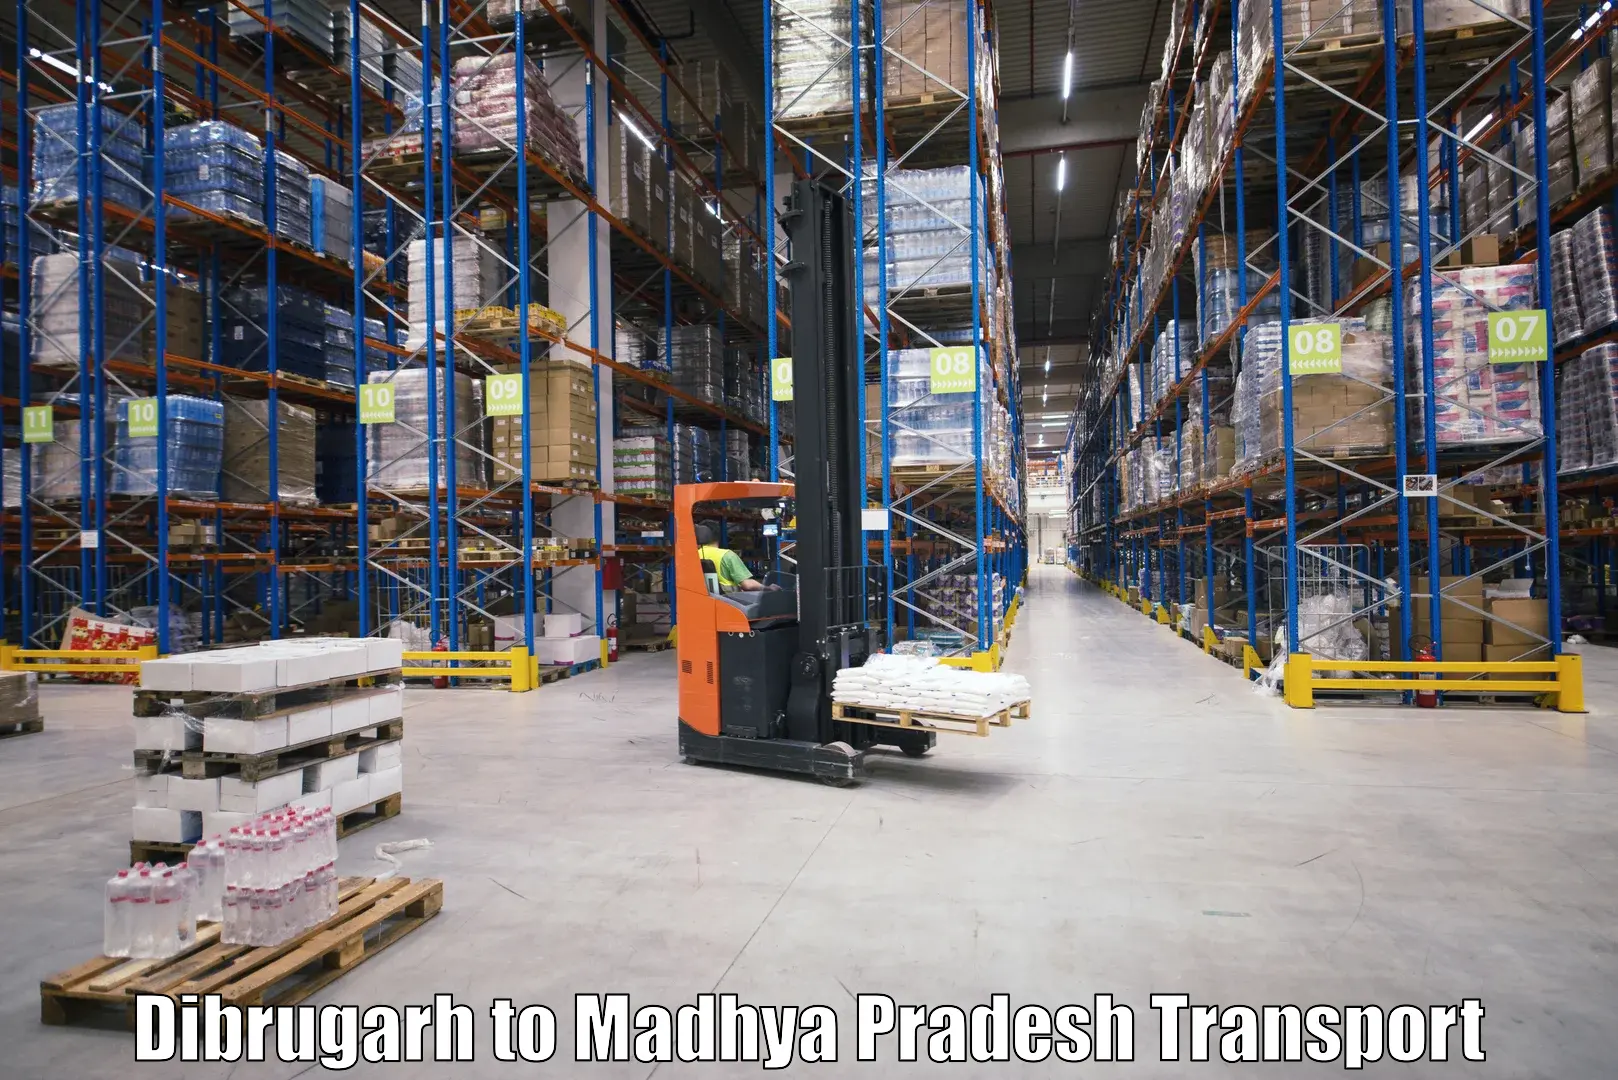 Truck transport companies in India Dibrugarh to Mandsaur